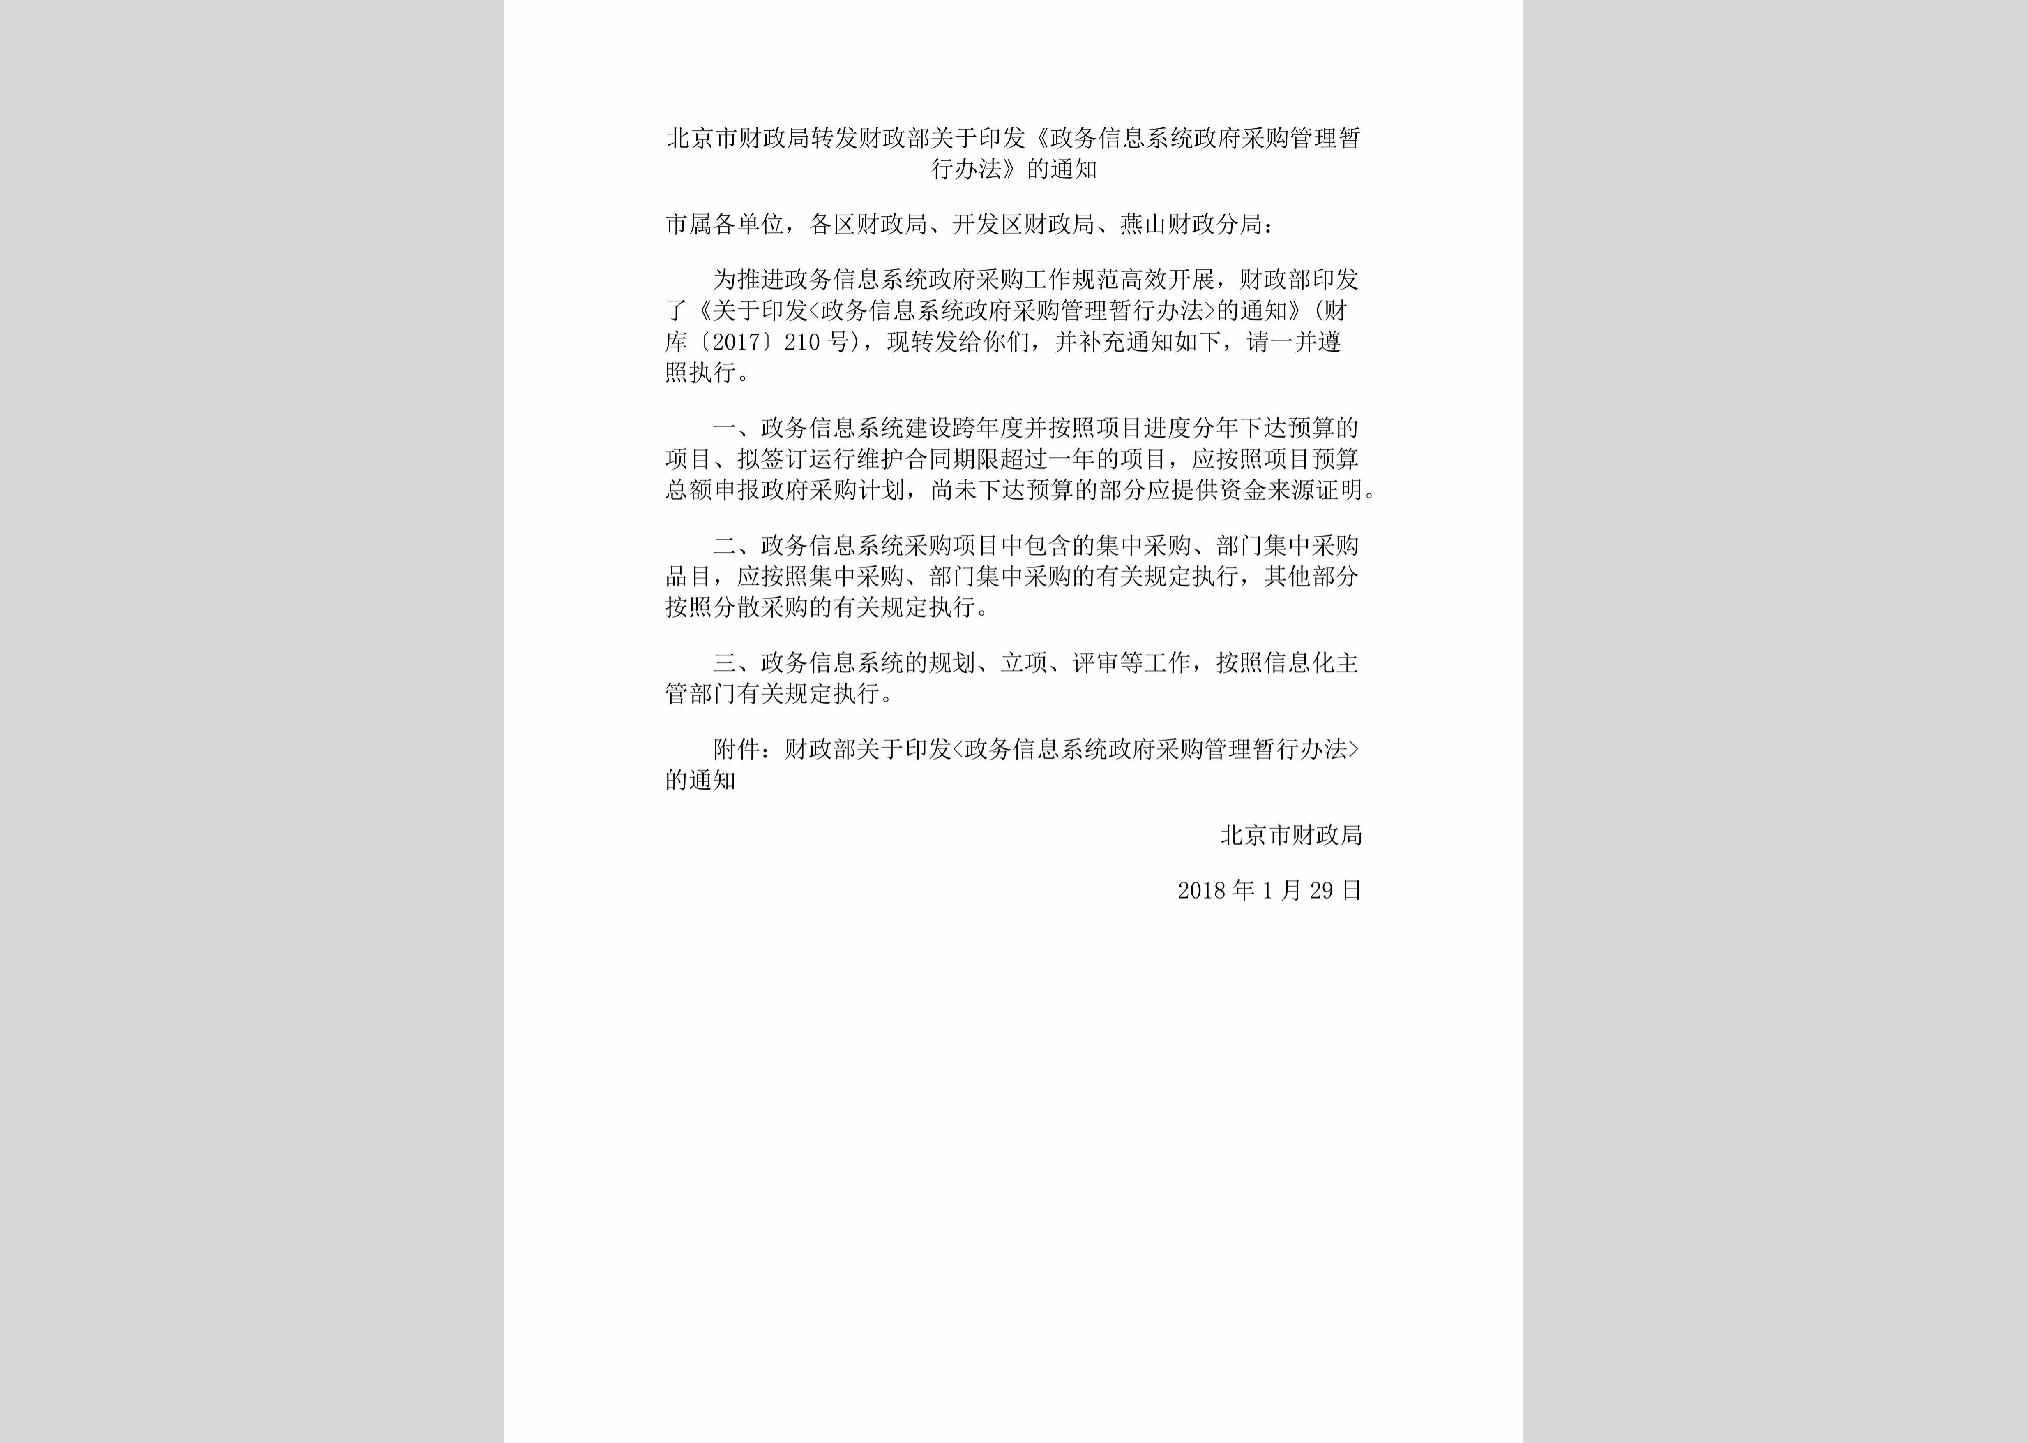 BJ-CZJYFTZ-2018：北京市财政局转发财政部关于印发《政务信息系统政府采购管理暂行办法》的通知